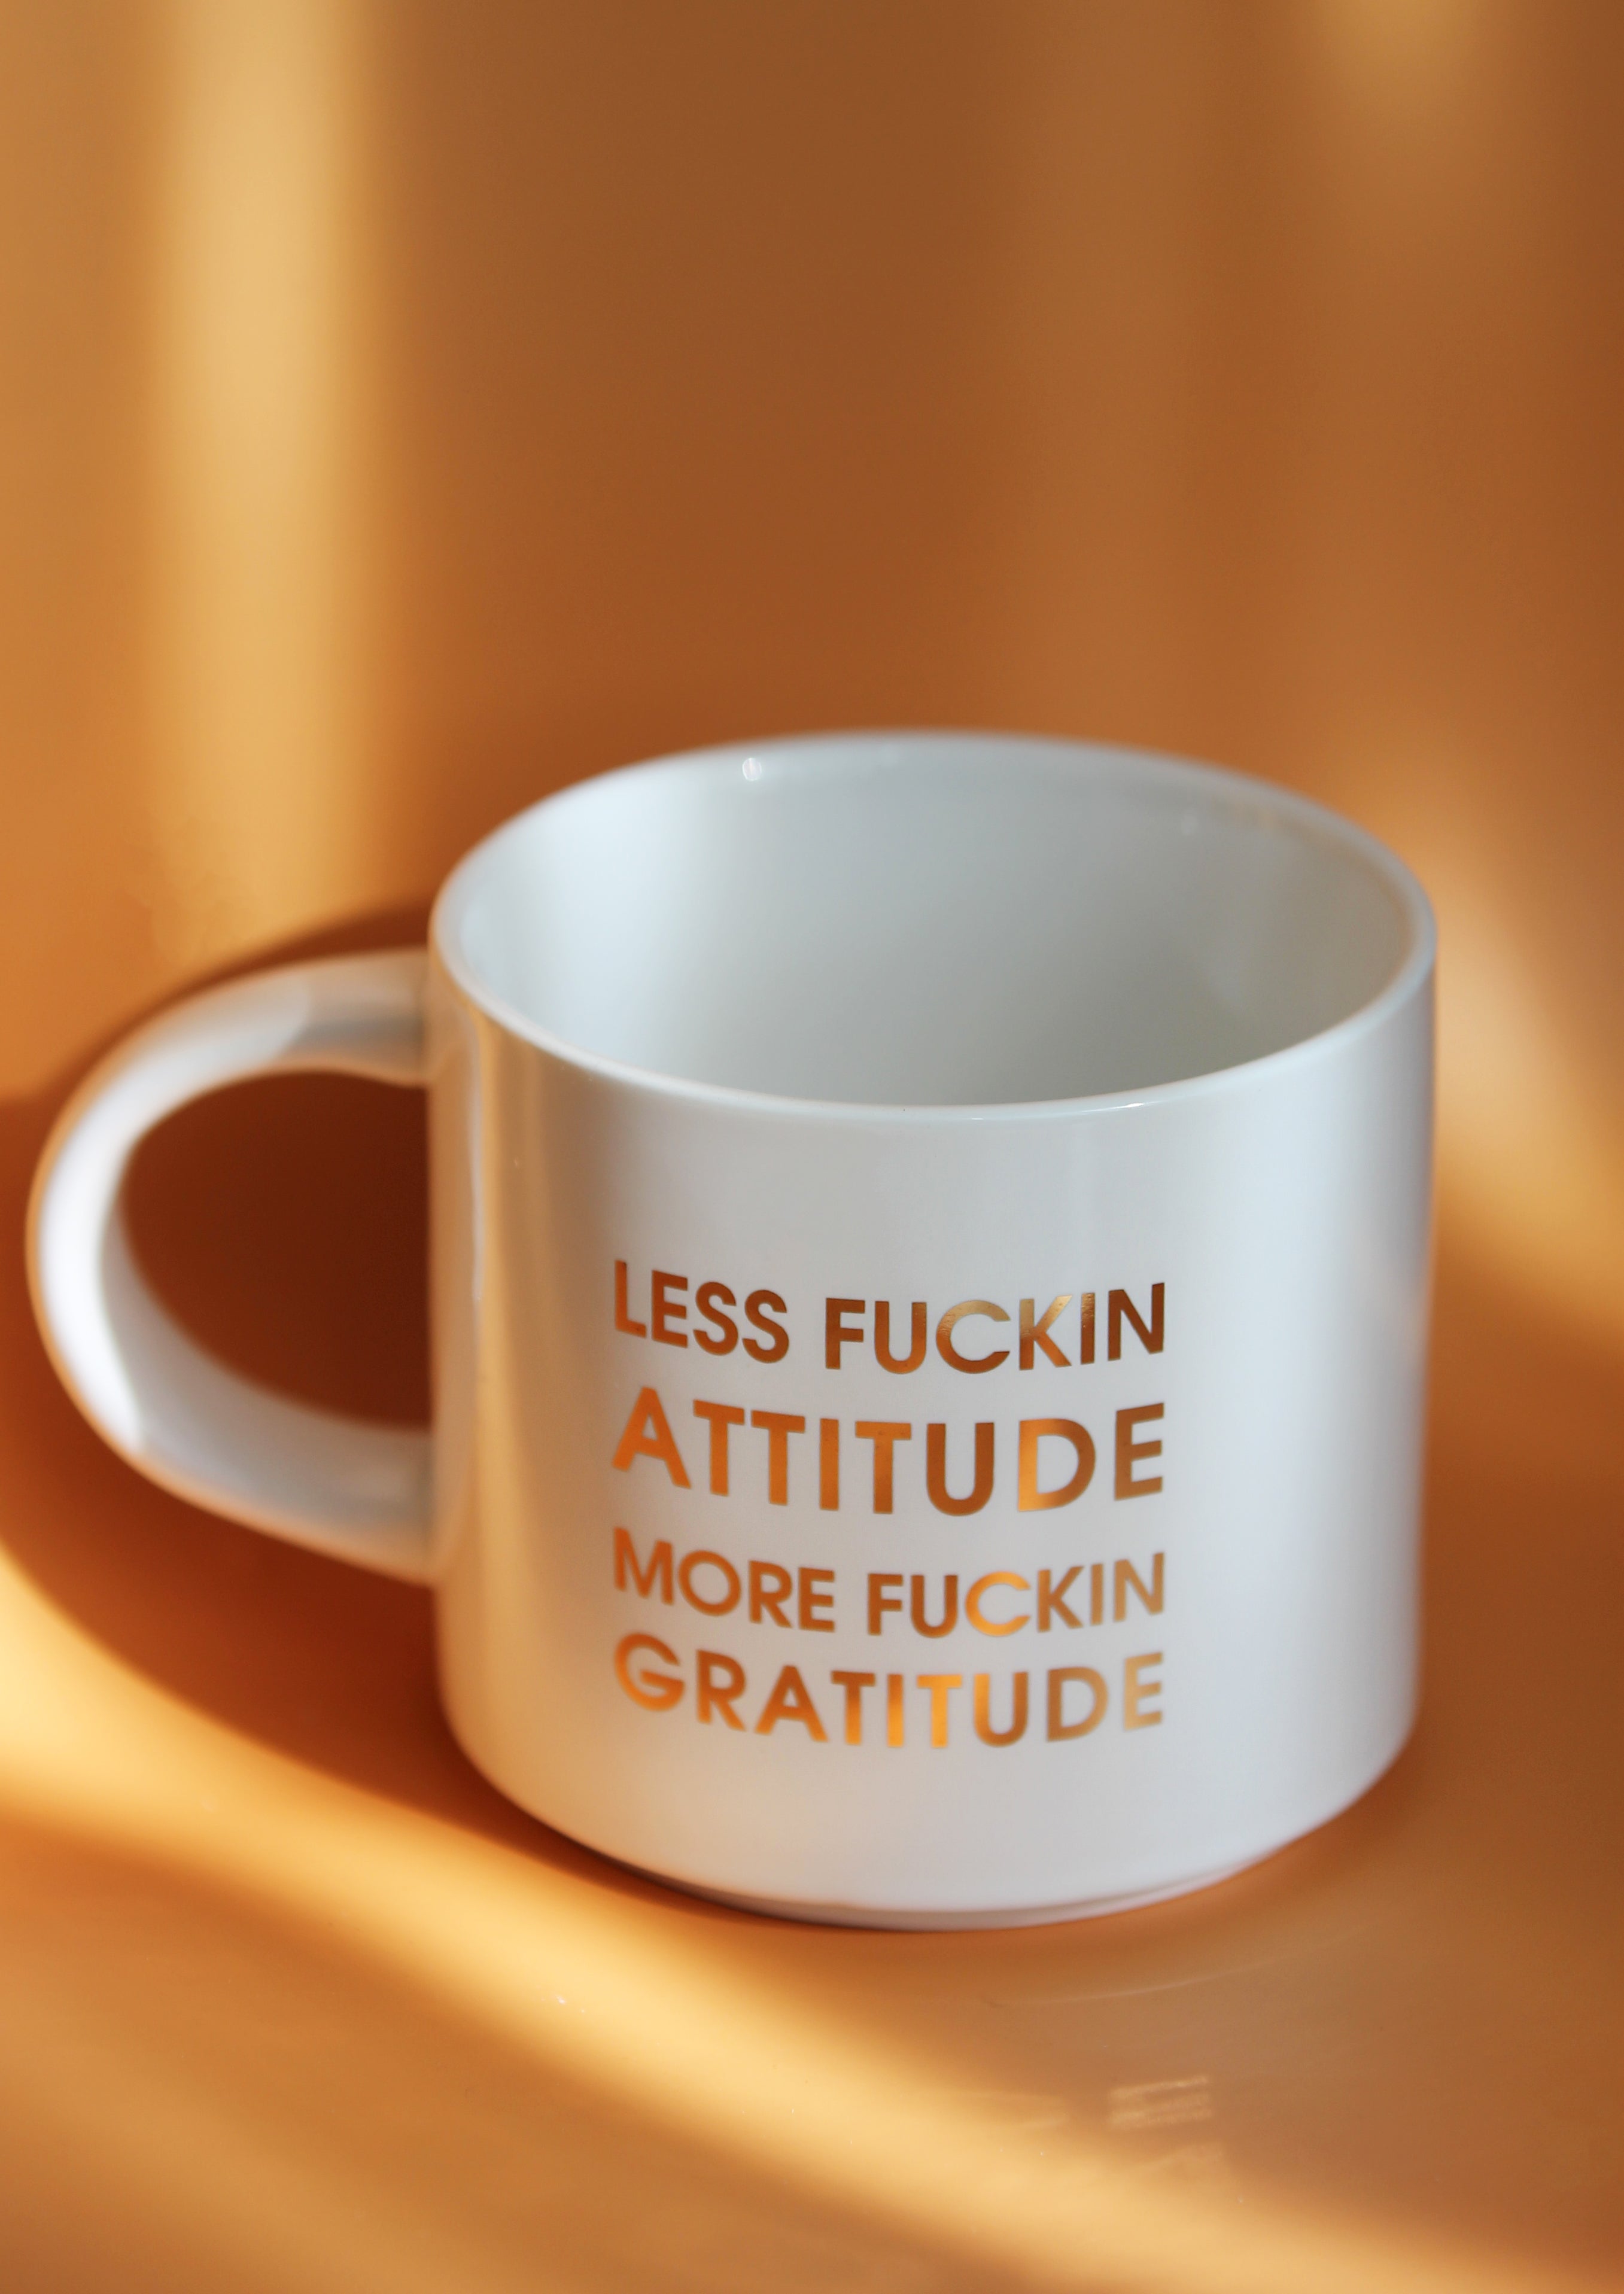 Less Attitude Mug